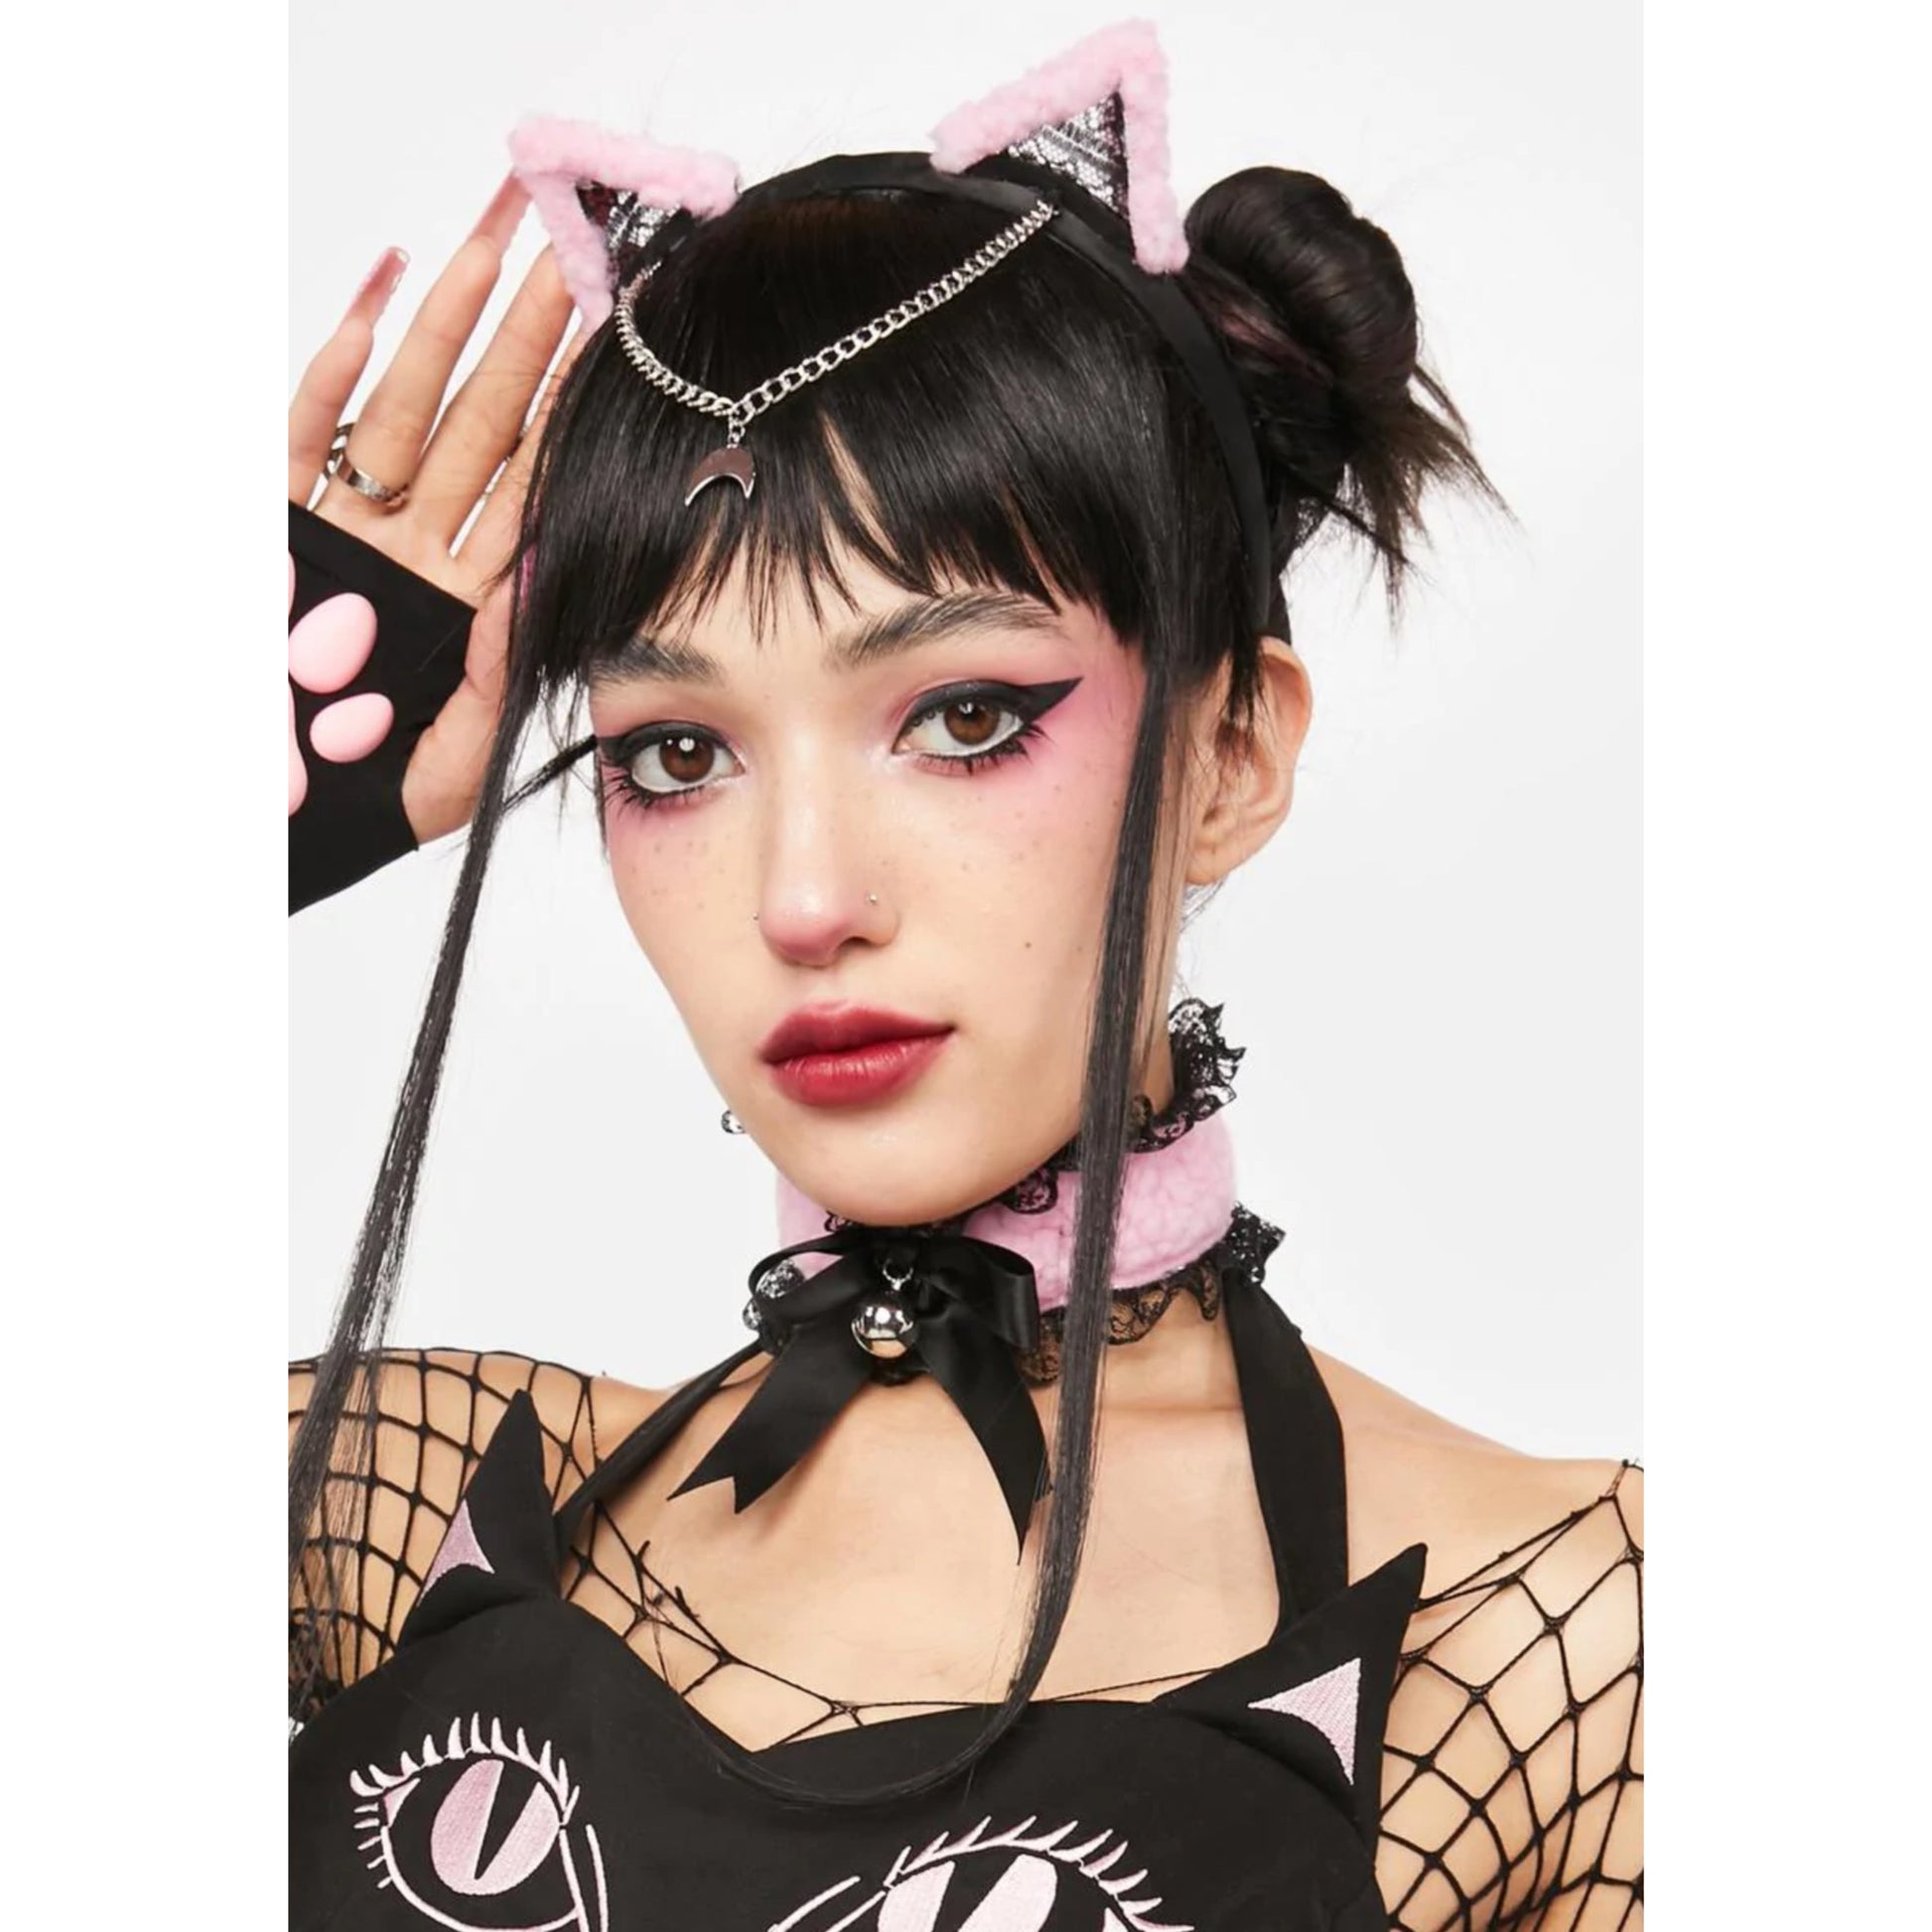 Kitty Costume Accessories Set | Pink Cat Tail - Matching Headband - Choker - The Grave Girls - Headbands